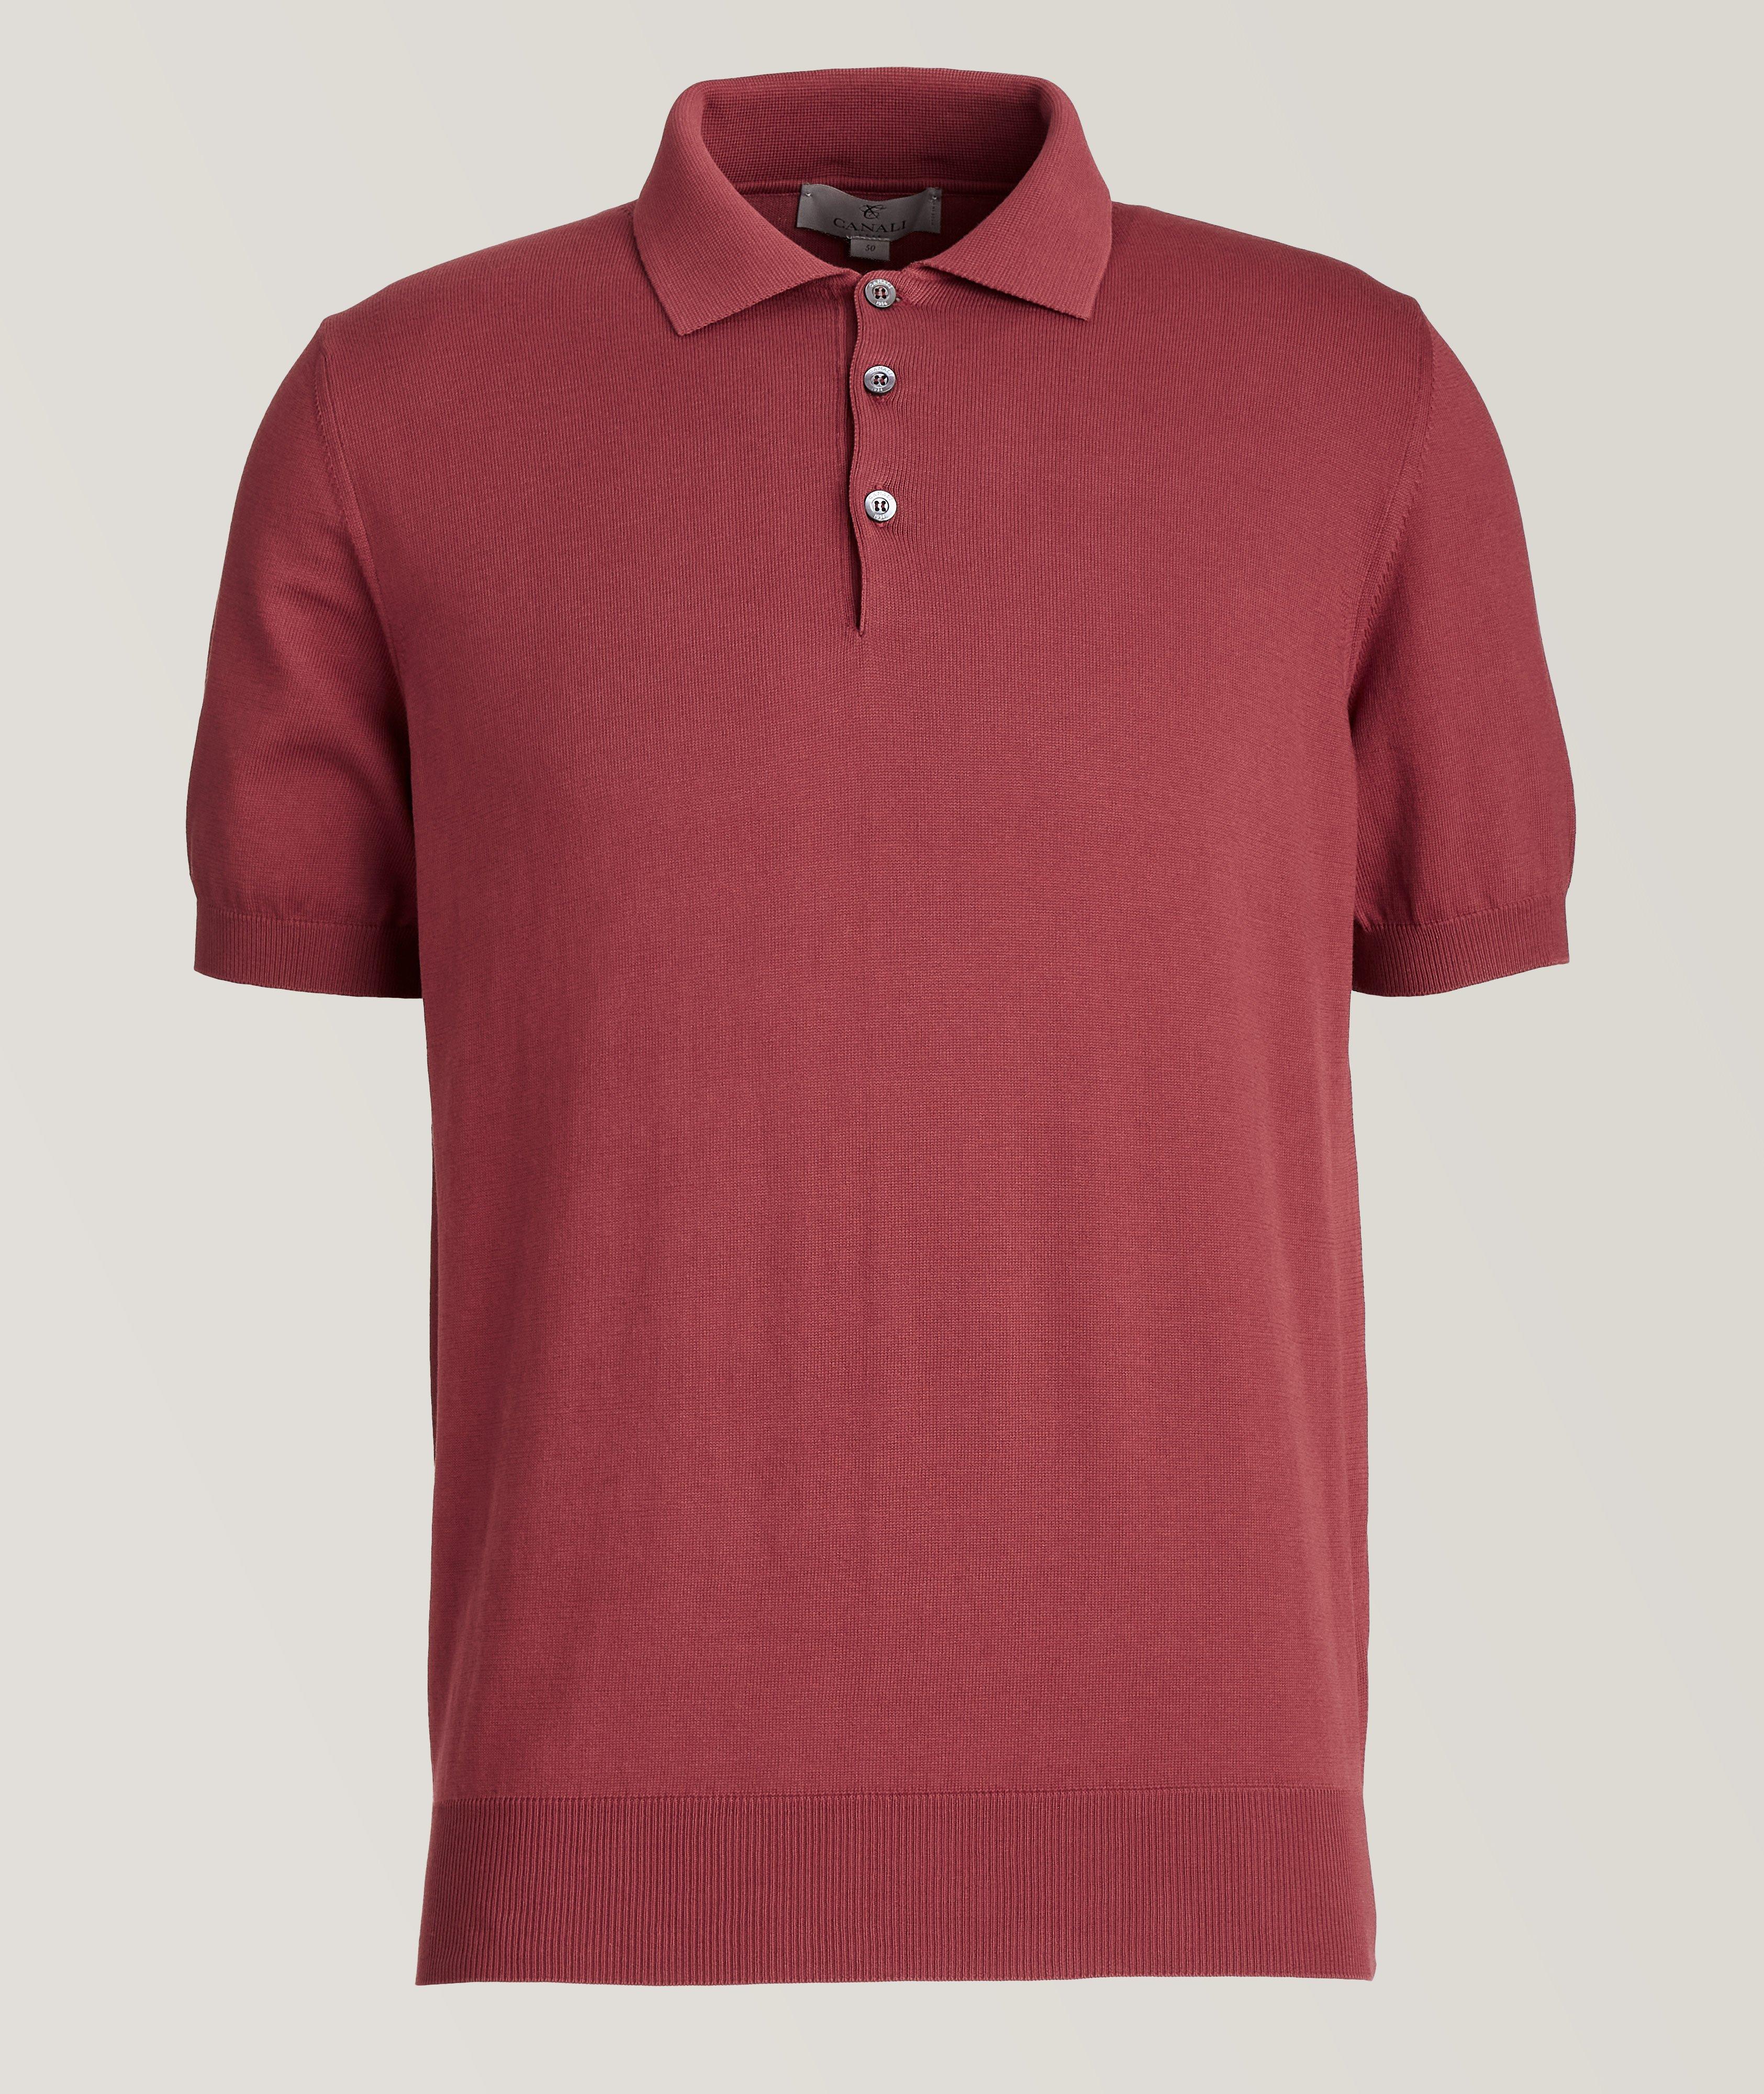 Harry rosen reyn spooner short sleeve tropical printed shirt